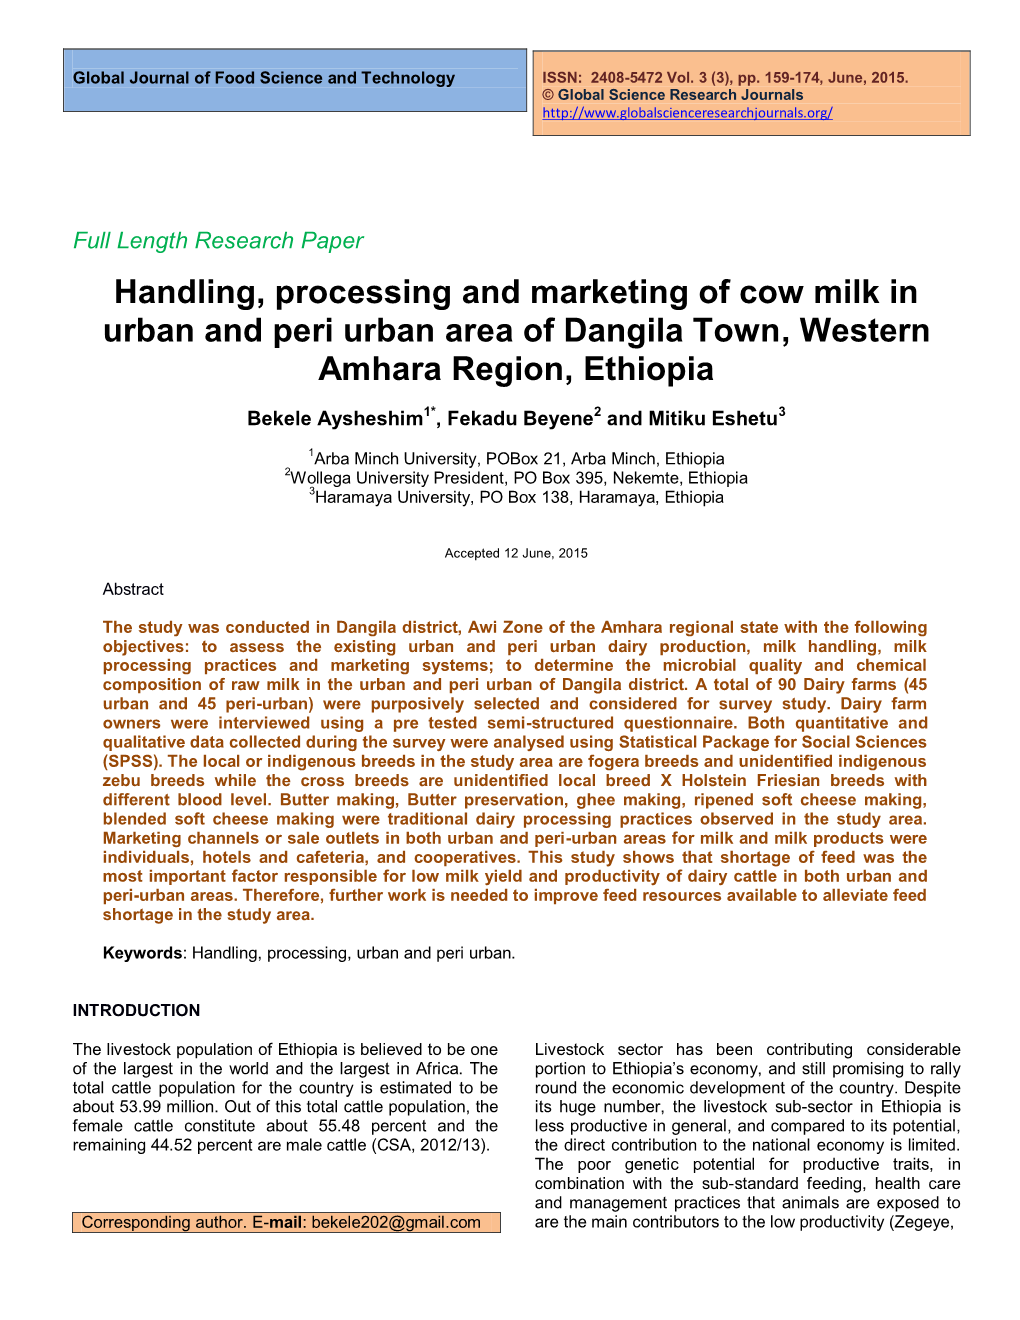 Handling, Processing and Marketing of Cow Milk in Urban and Peri Urban Area of Dangila Town, Western Amhara Region, Ethiopia